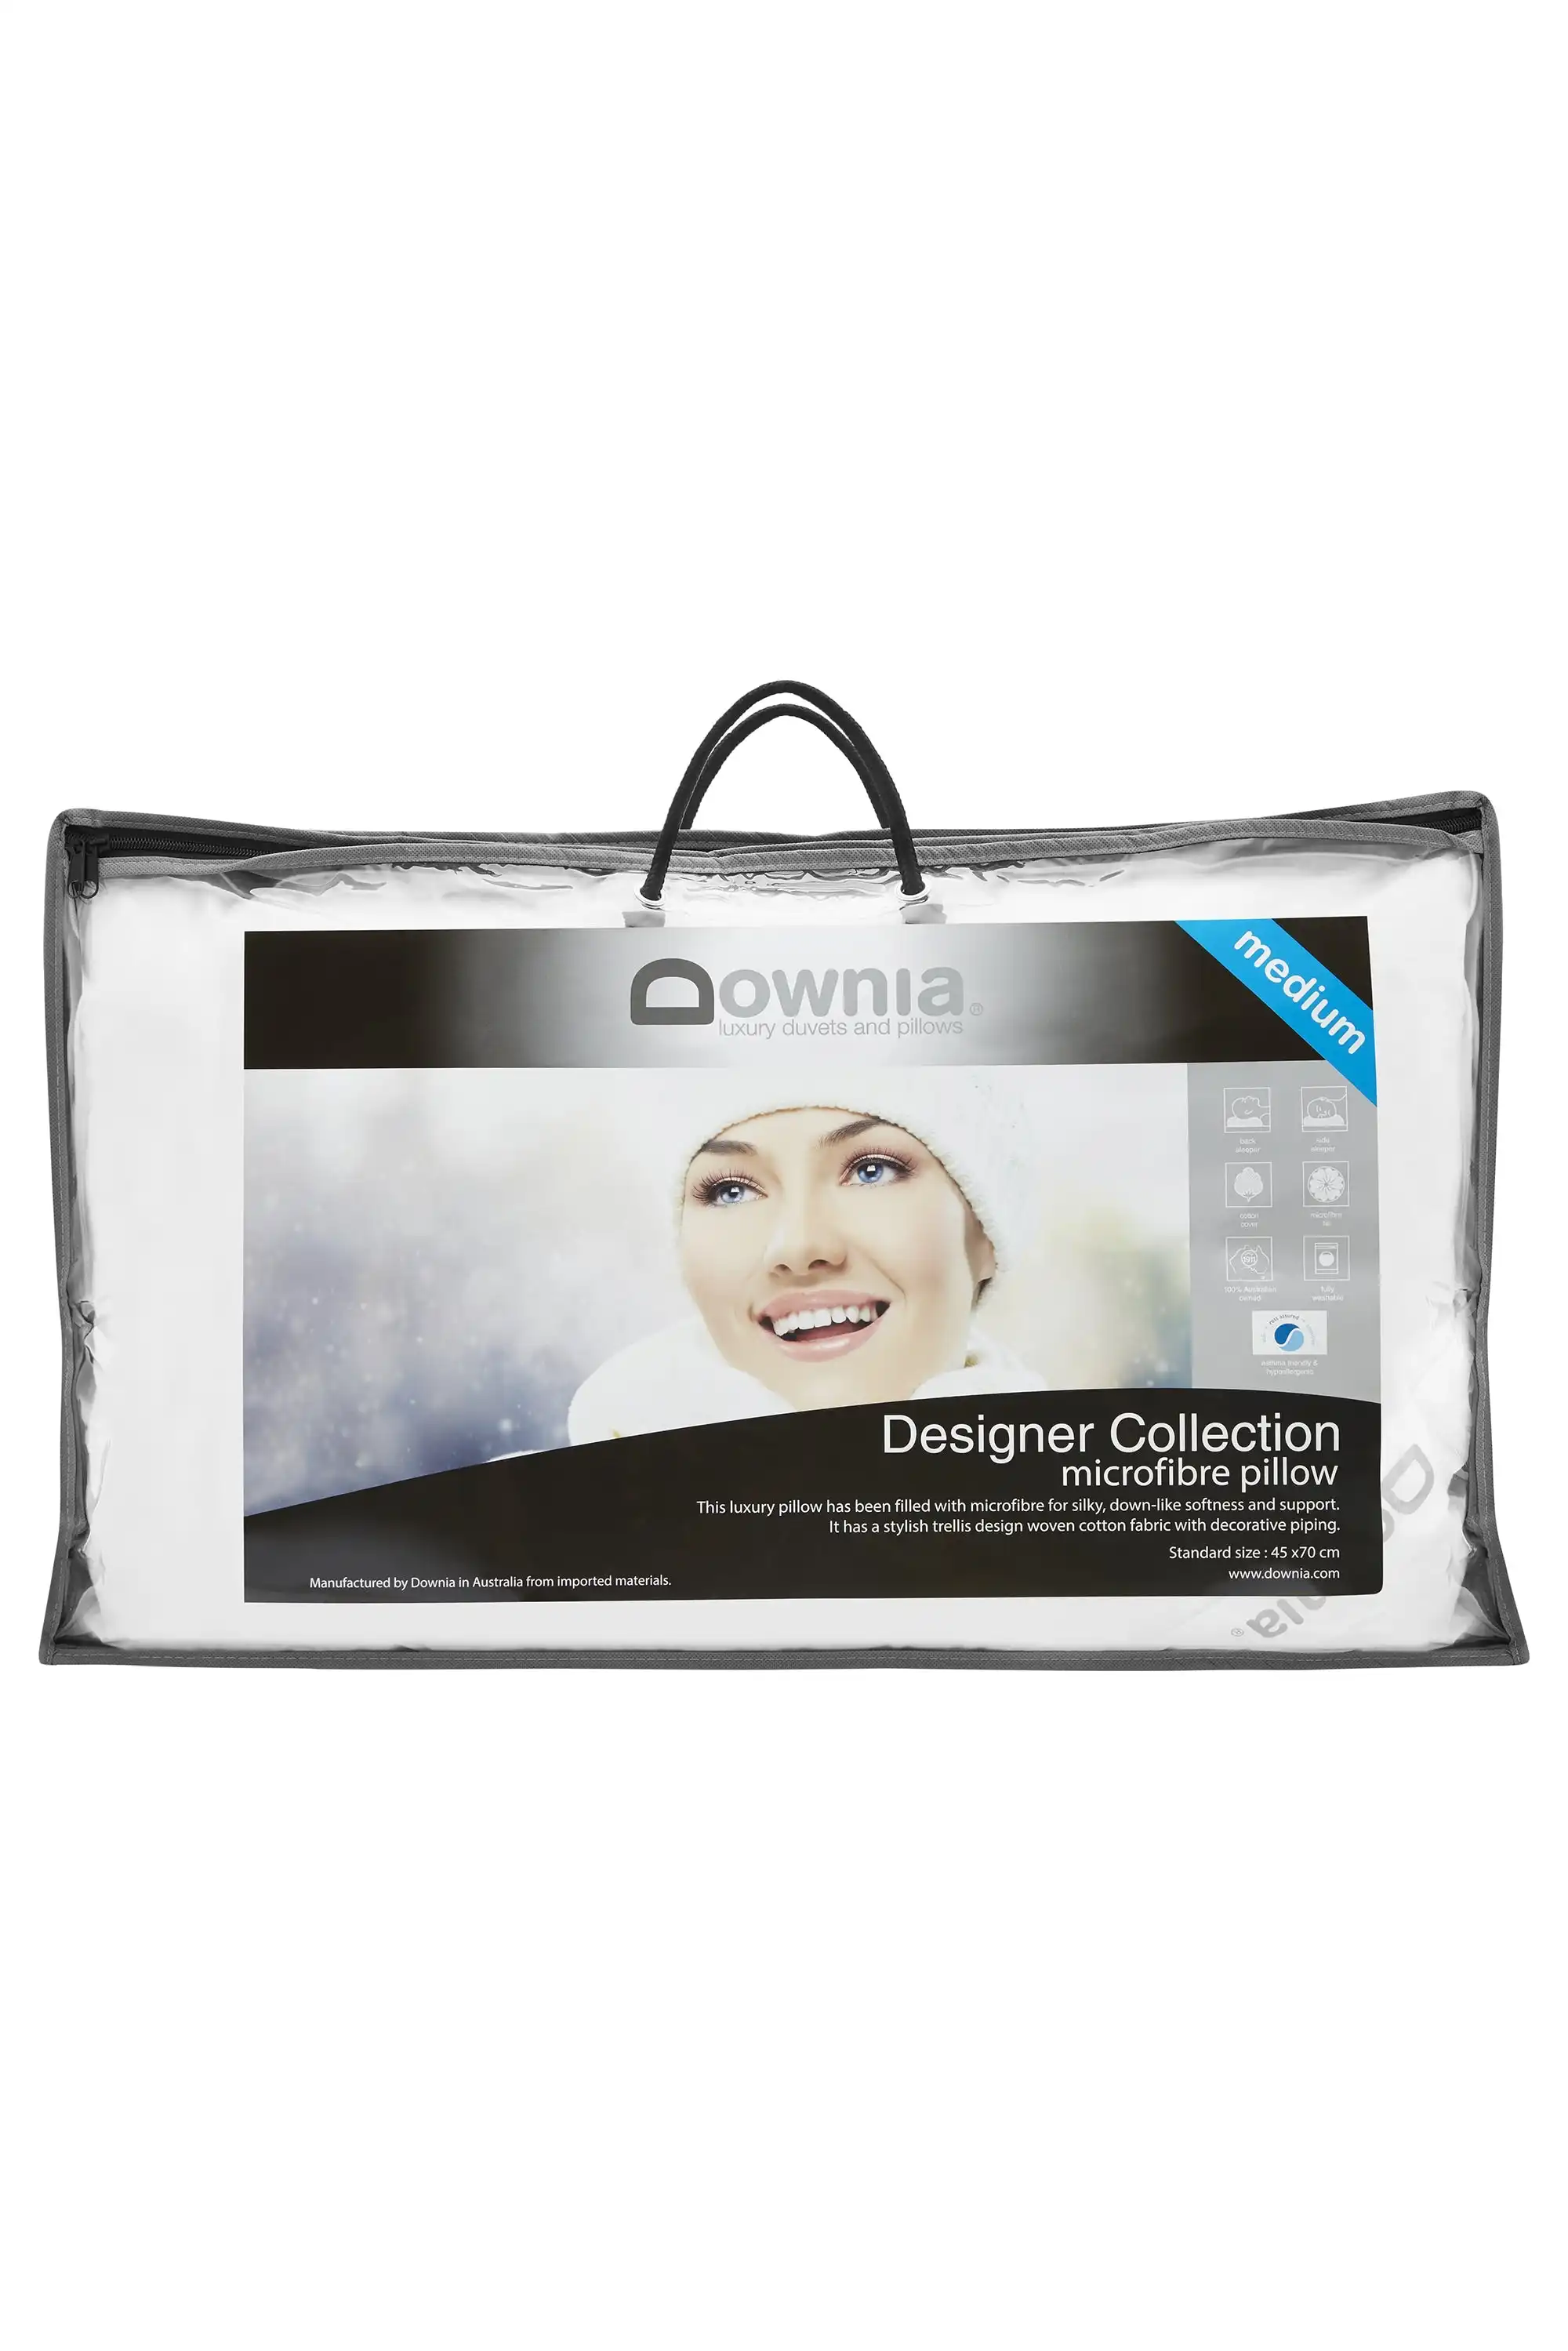 Downia DESIGNER COLLECTION Microfibre Pillow - Firm